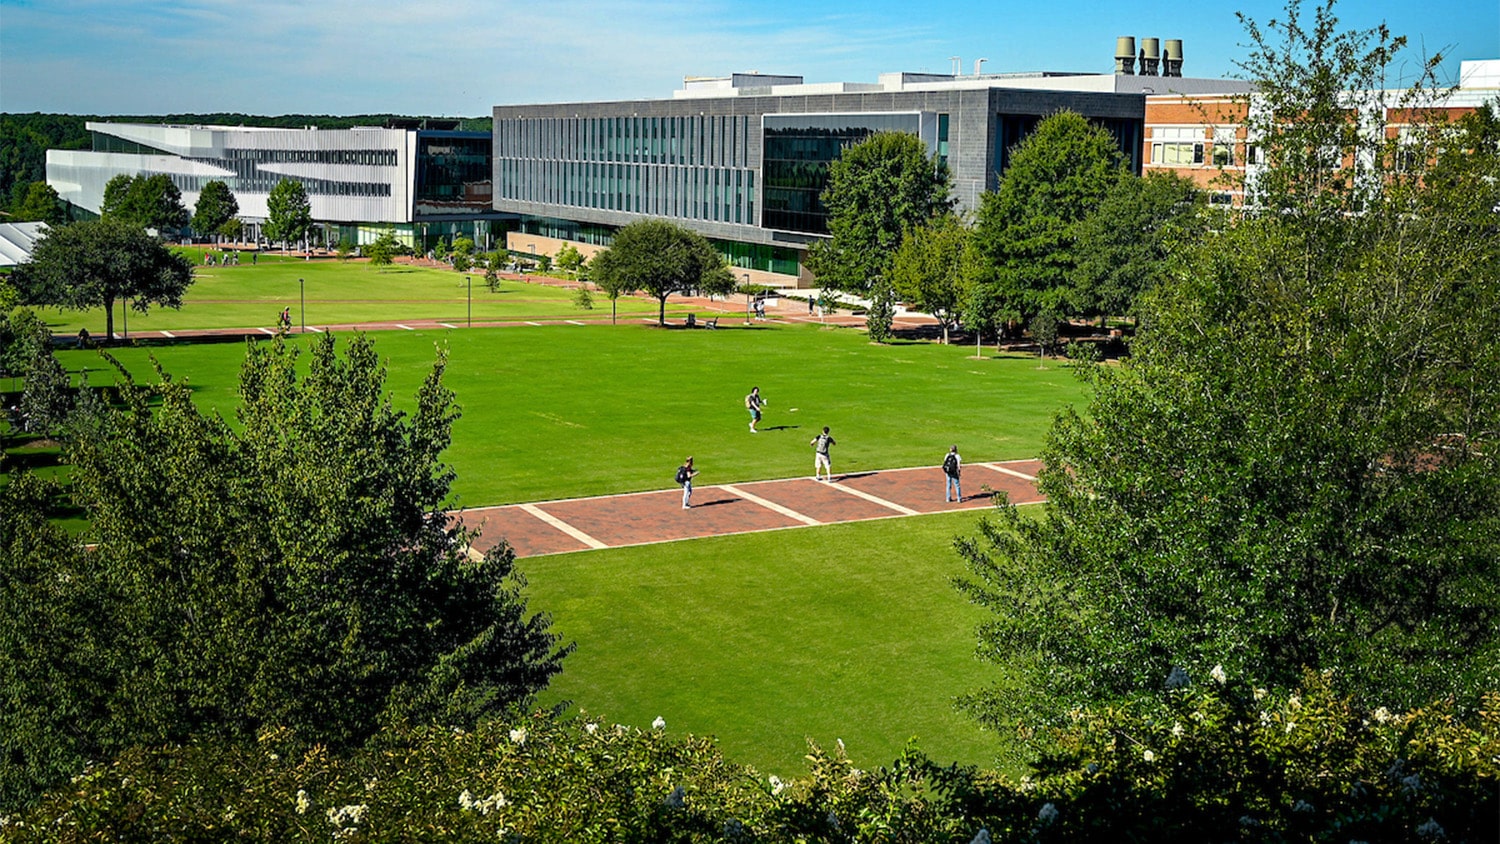 View through the trees of Centennial Campus